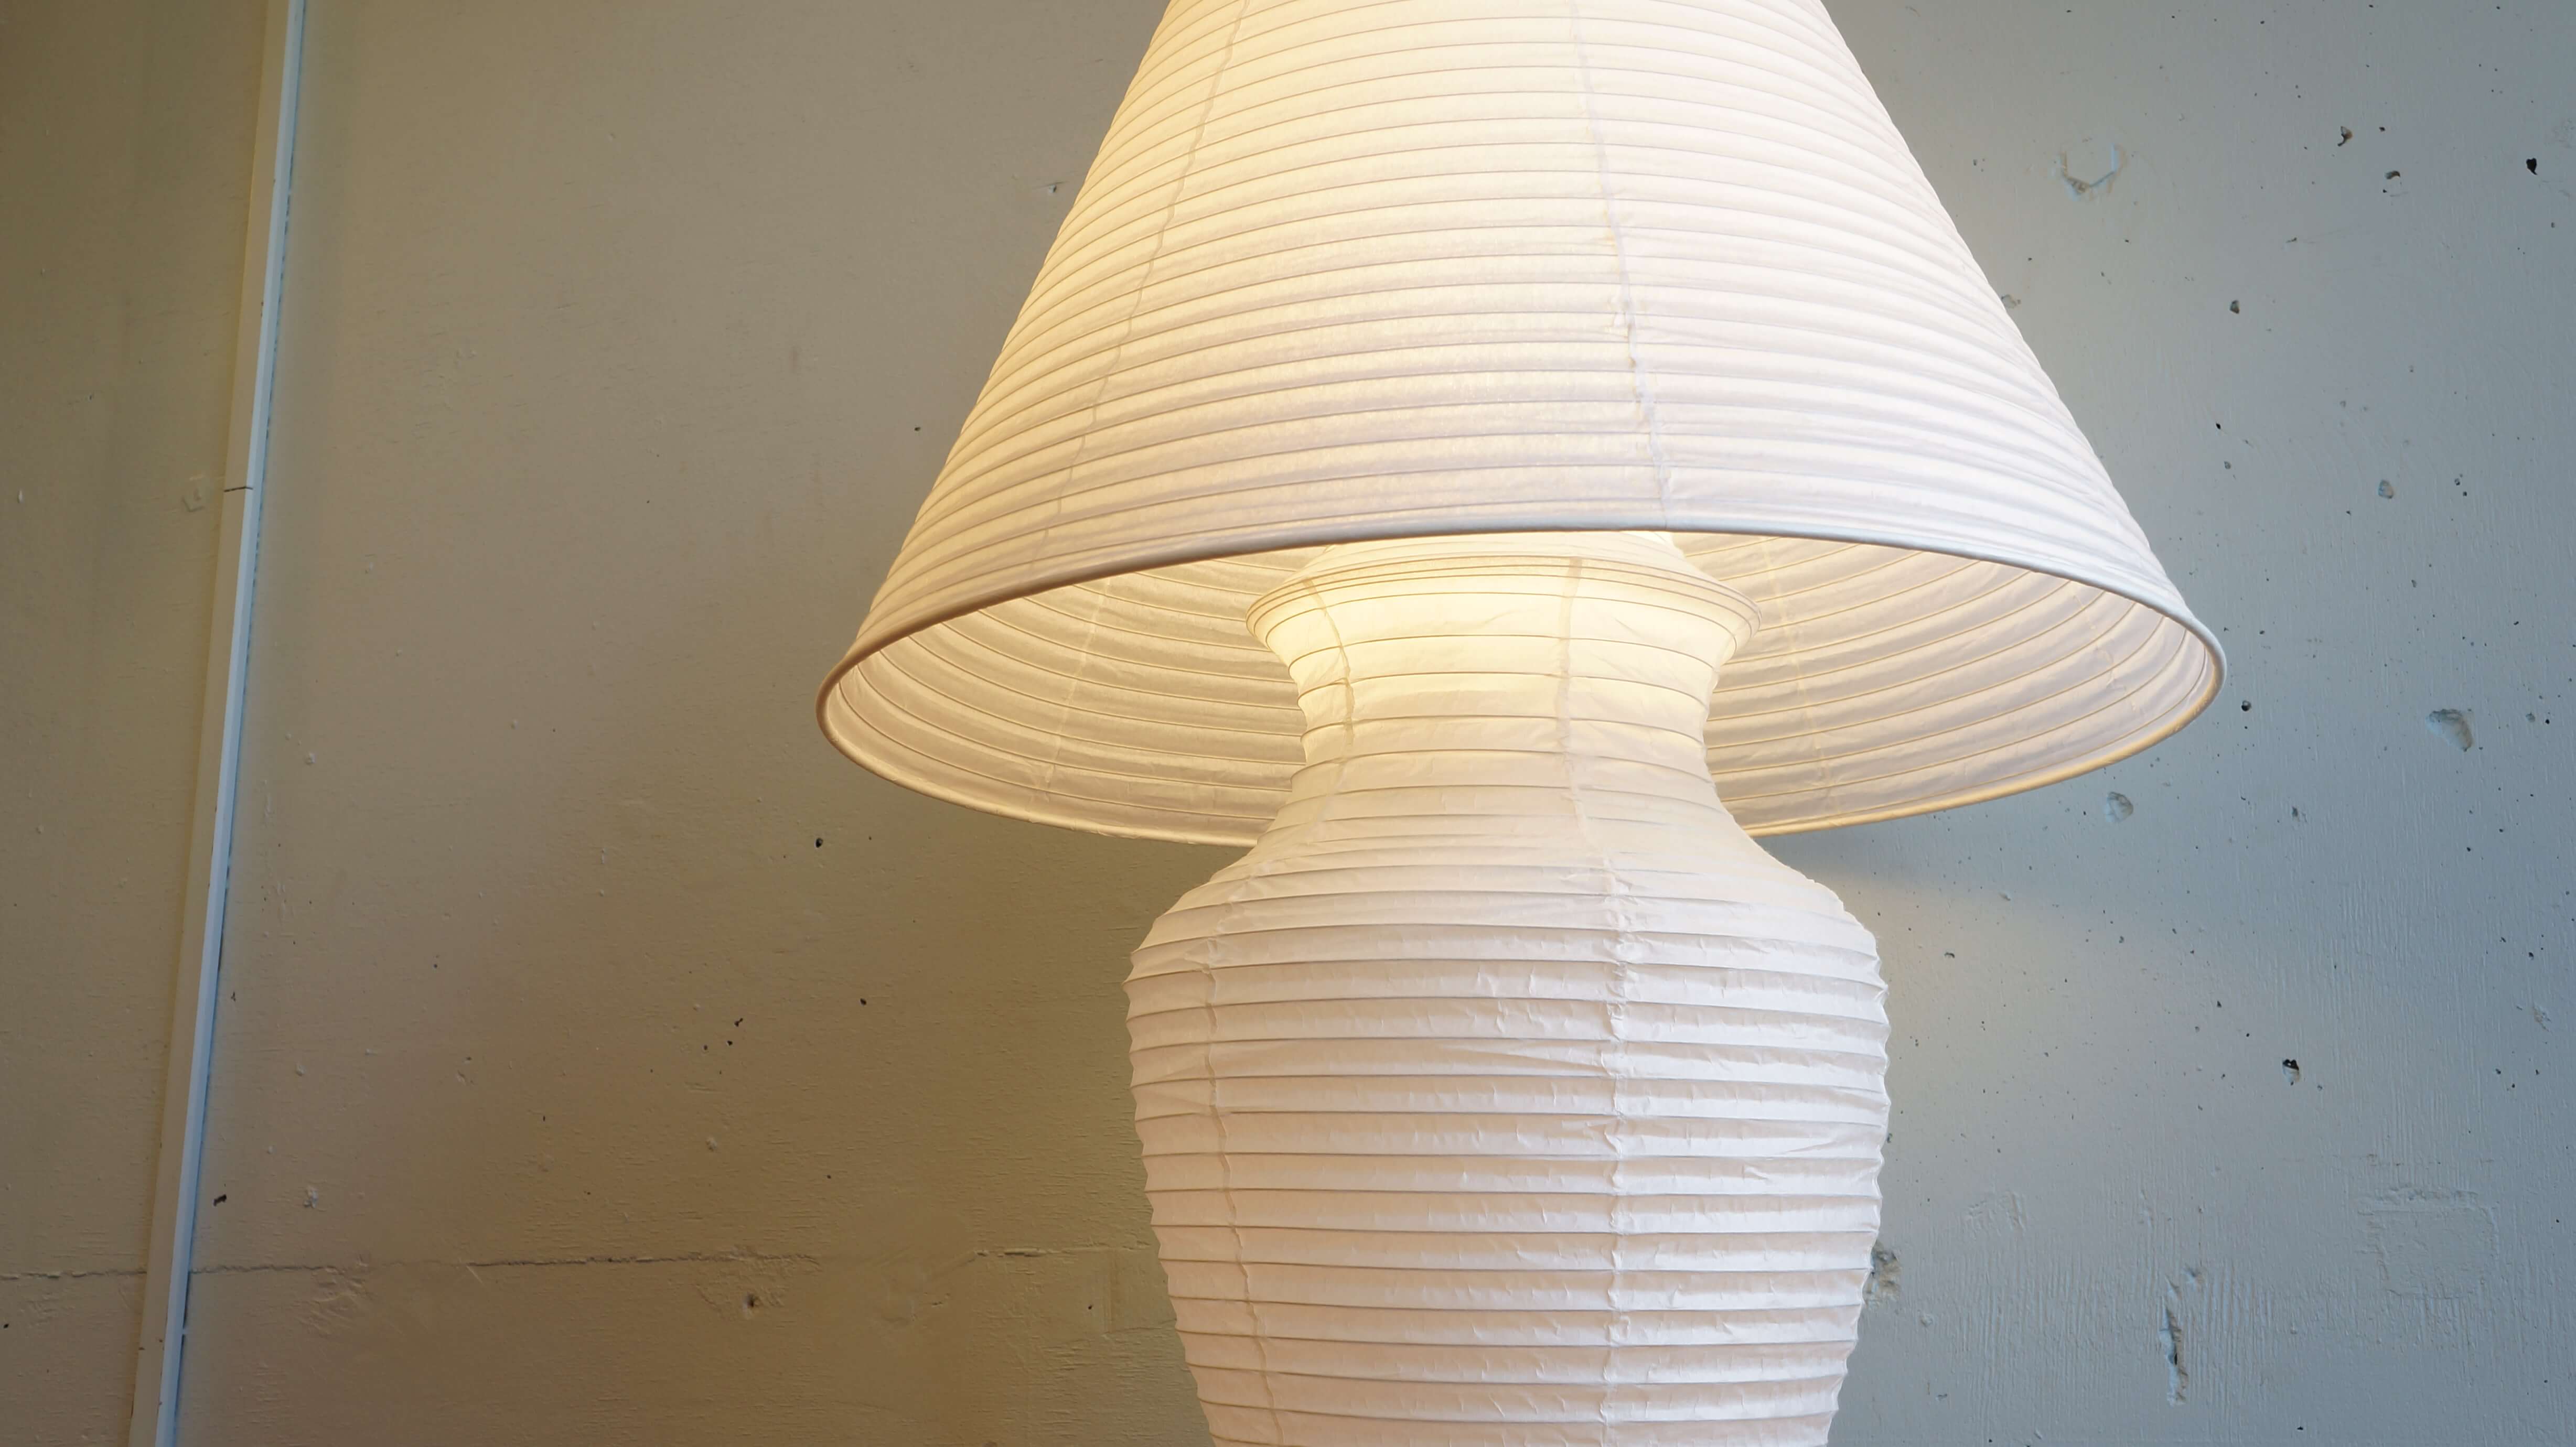 Cibone Ron Gilad design Table Lamp/シボネ ロン・ギラッド デザイン テーブルランプ